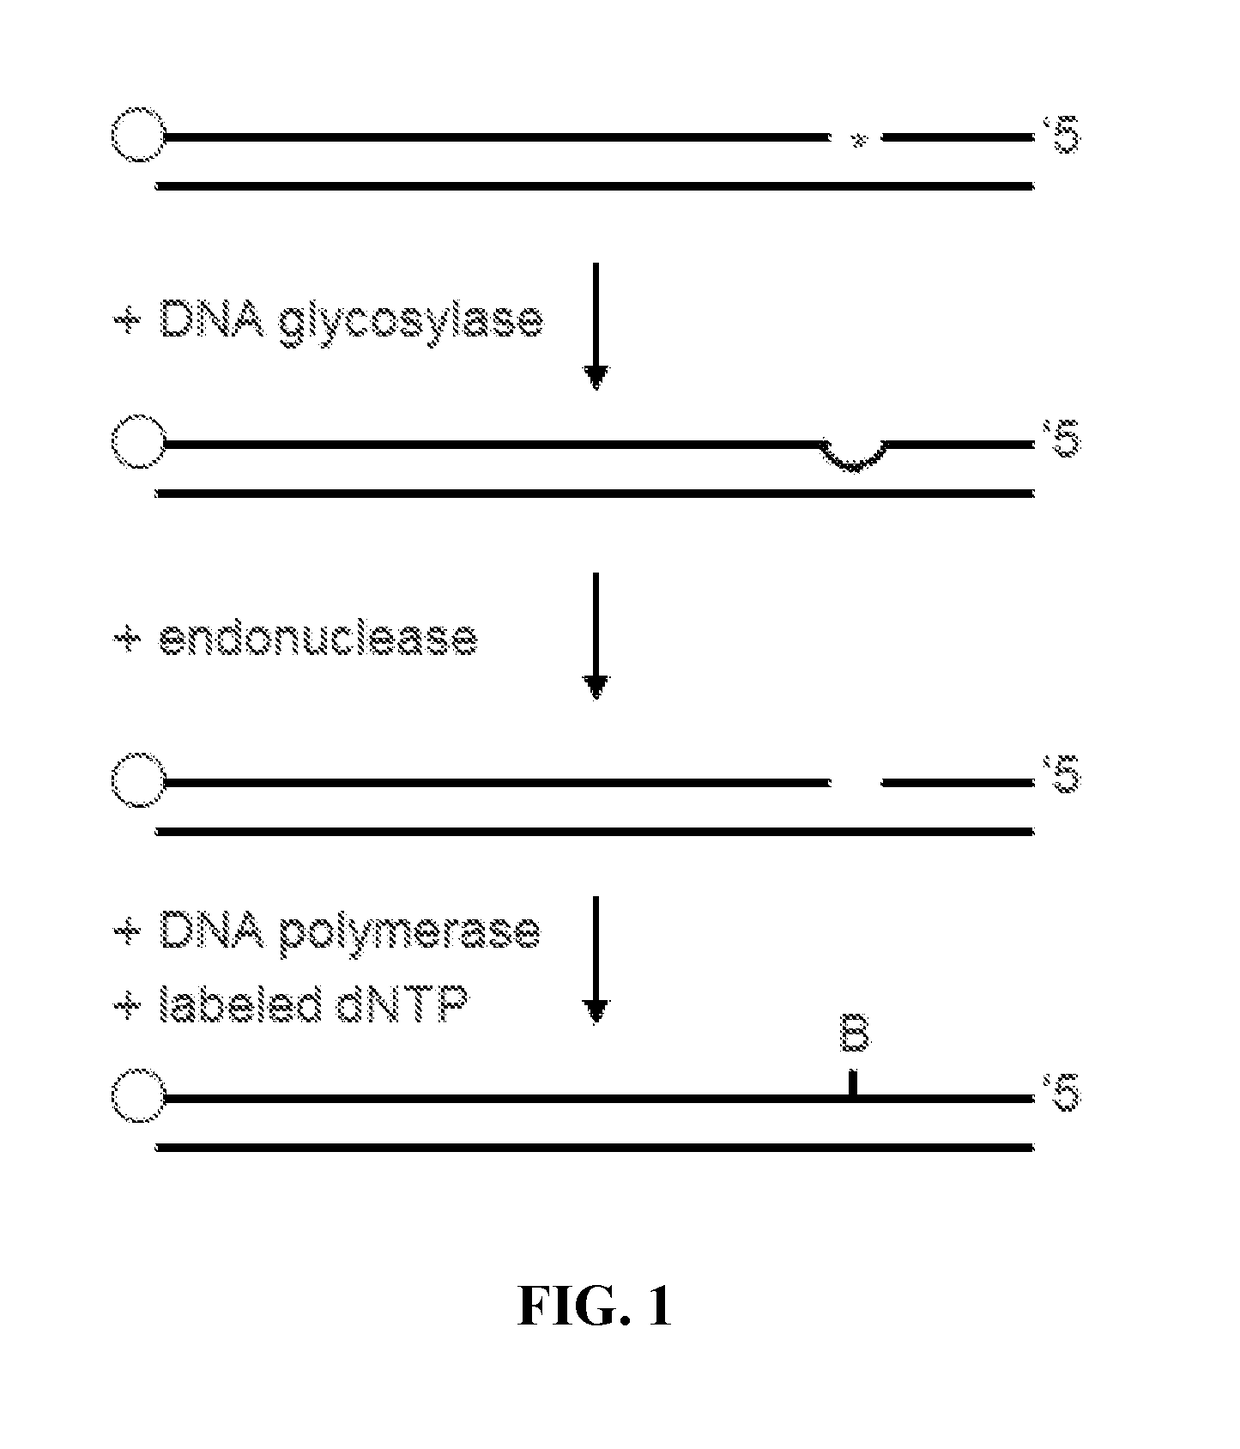 Identification of genetic modifications